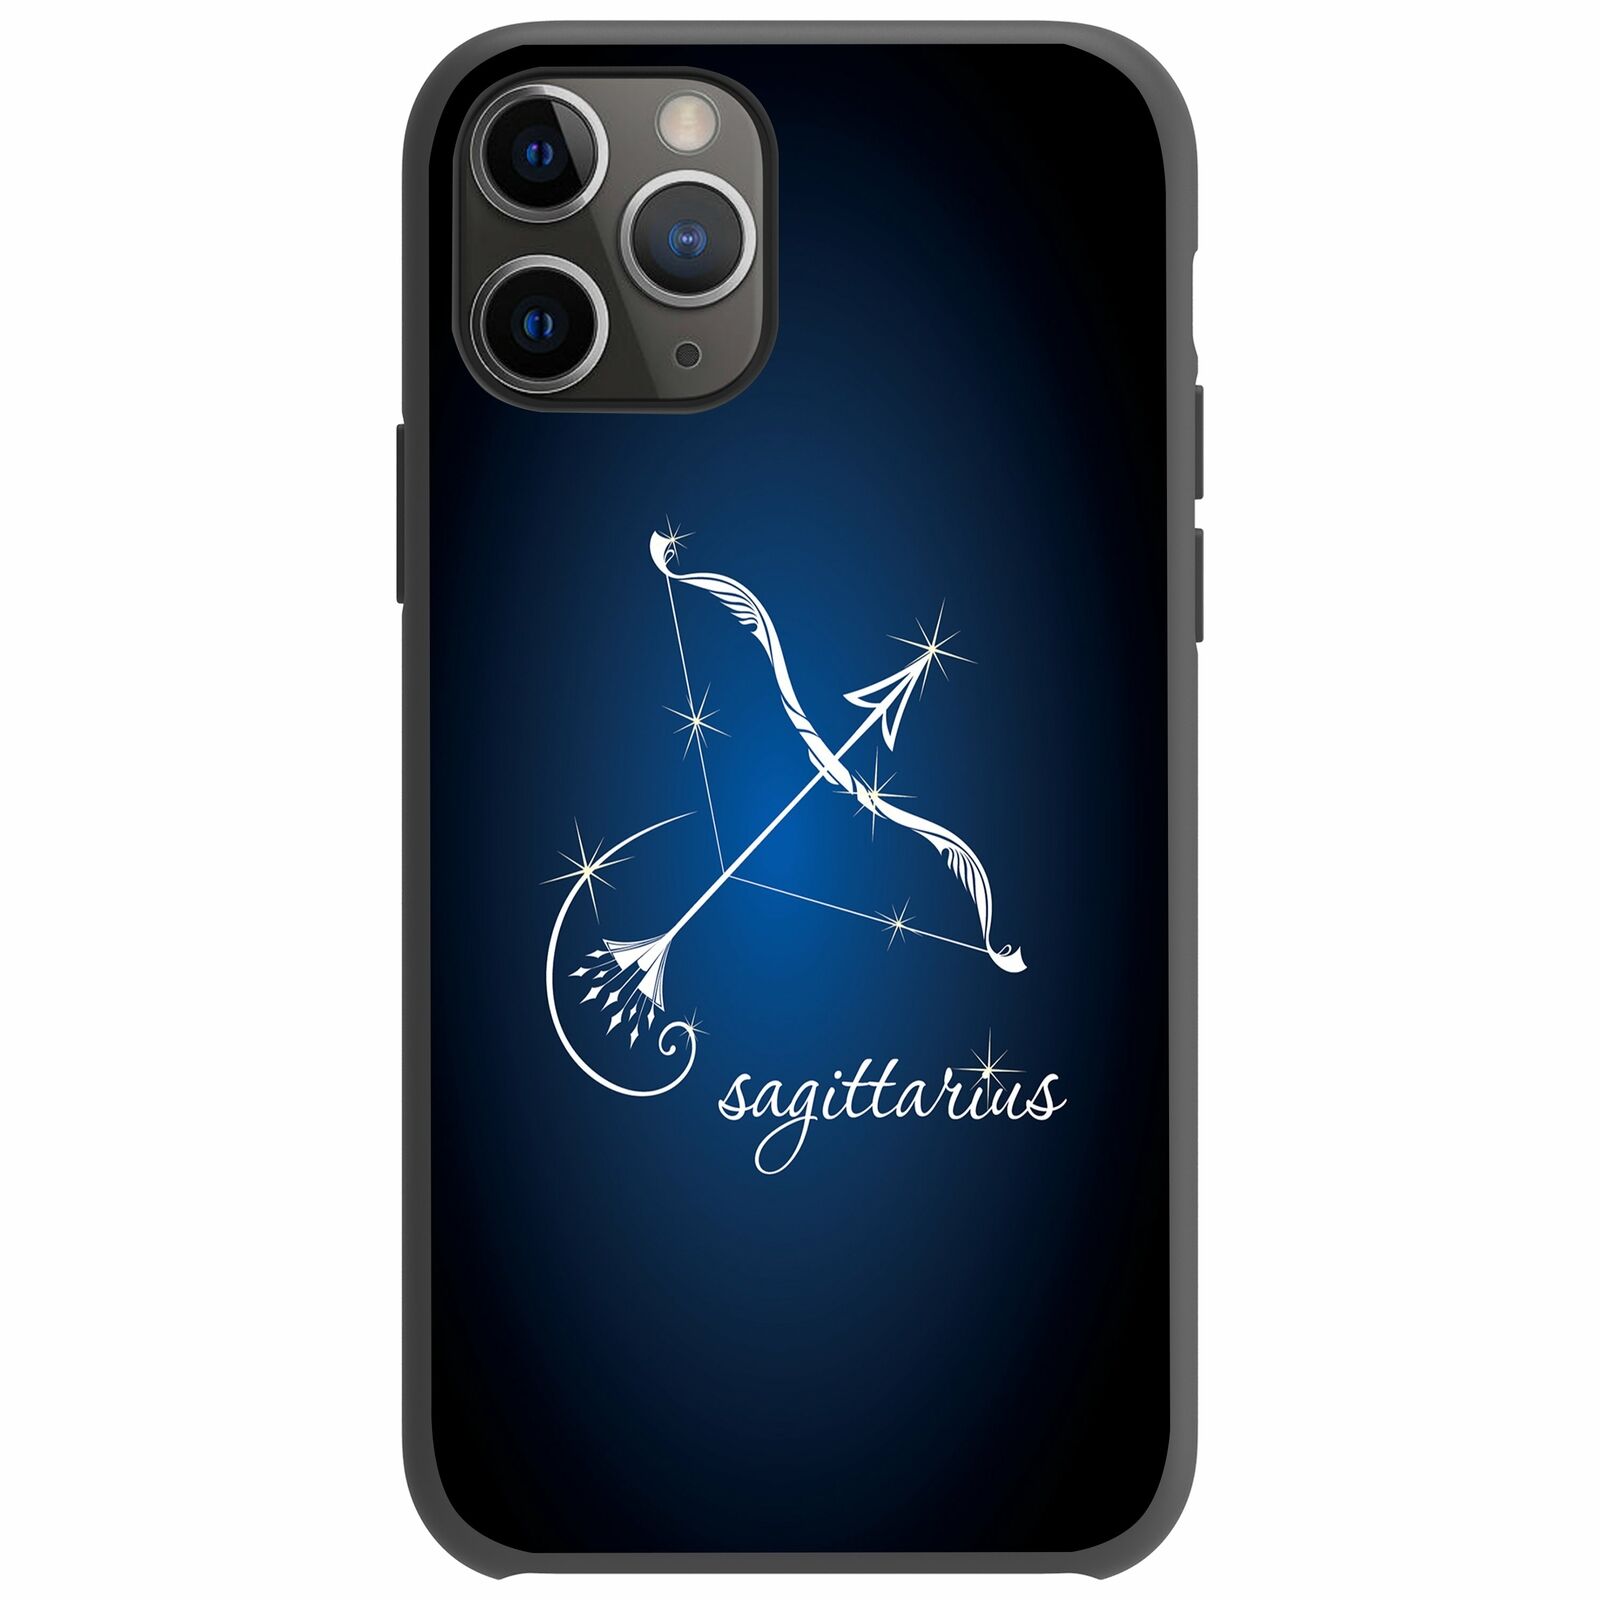 For Apple iPhone 11 Pro 5.8 Flexible Gray TPU Case - Zodiac Design iPhone Cases AtlasCase Sagittarius 